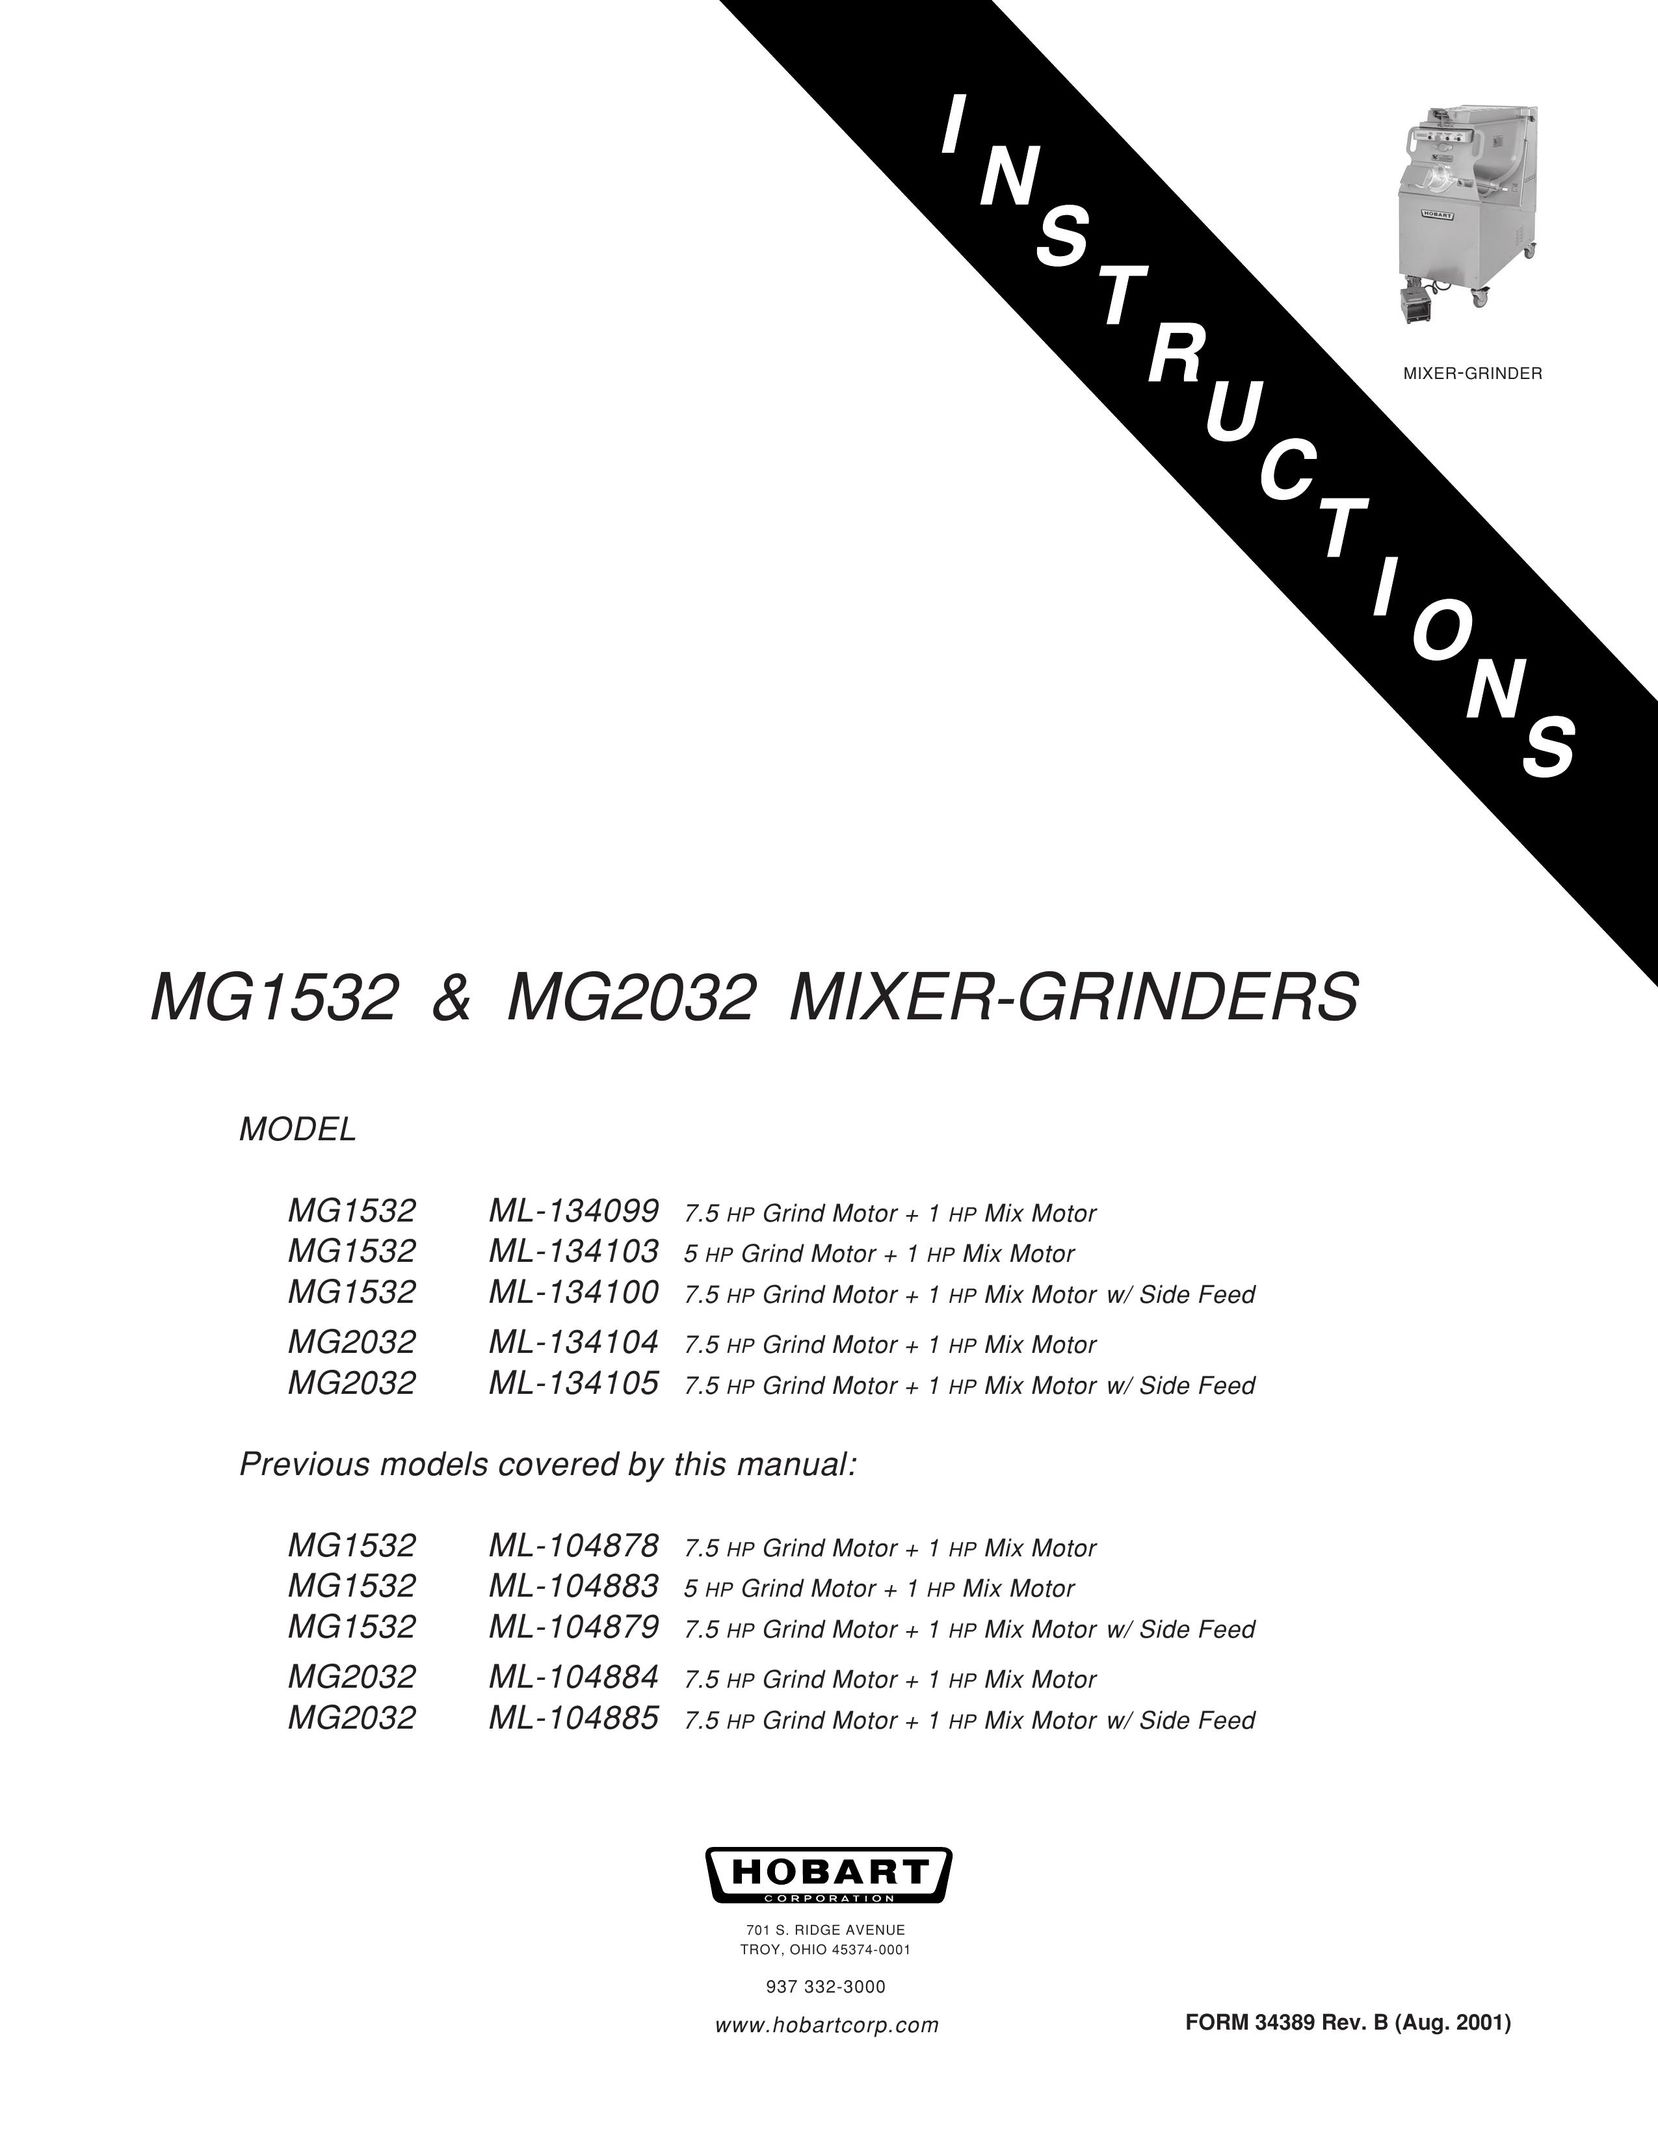 Hobart MG2032 Blender User Manual